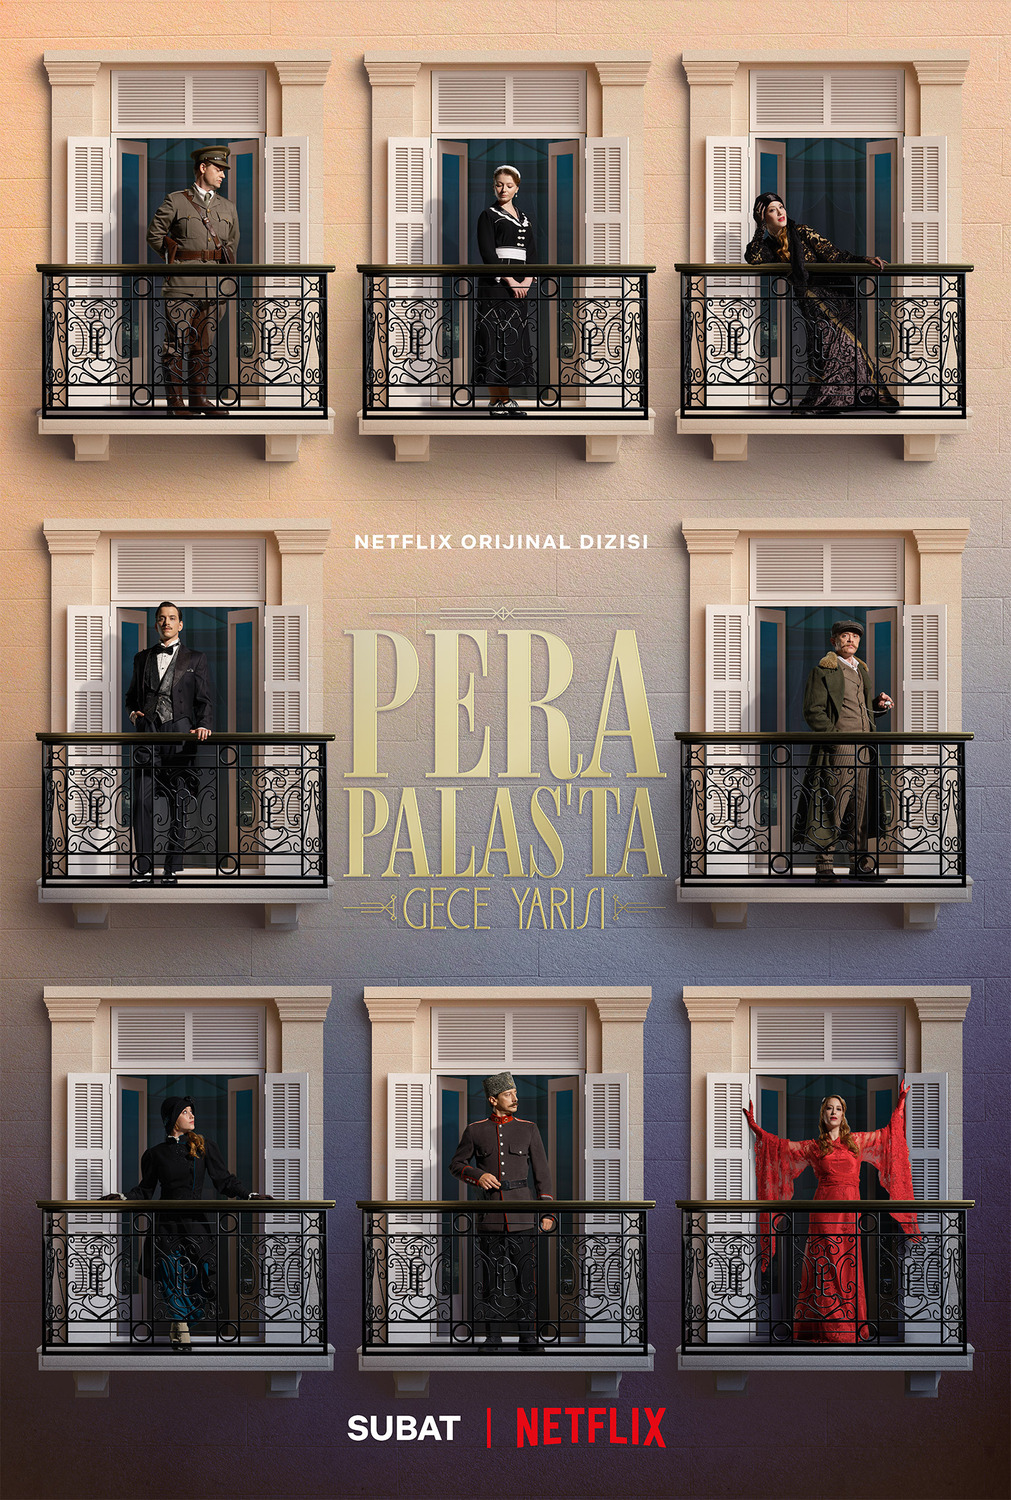 Extra Large TV Poster Image for Pera Palas'ta Gece Yarisi (#1 of 10)